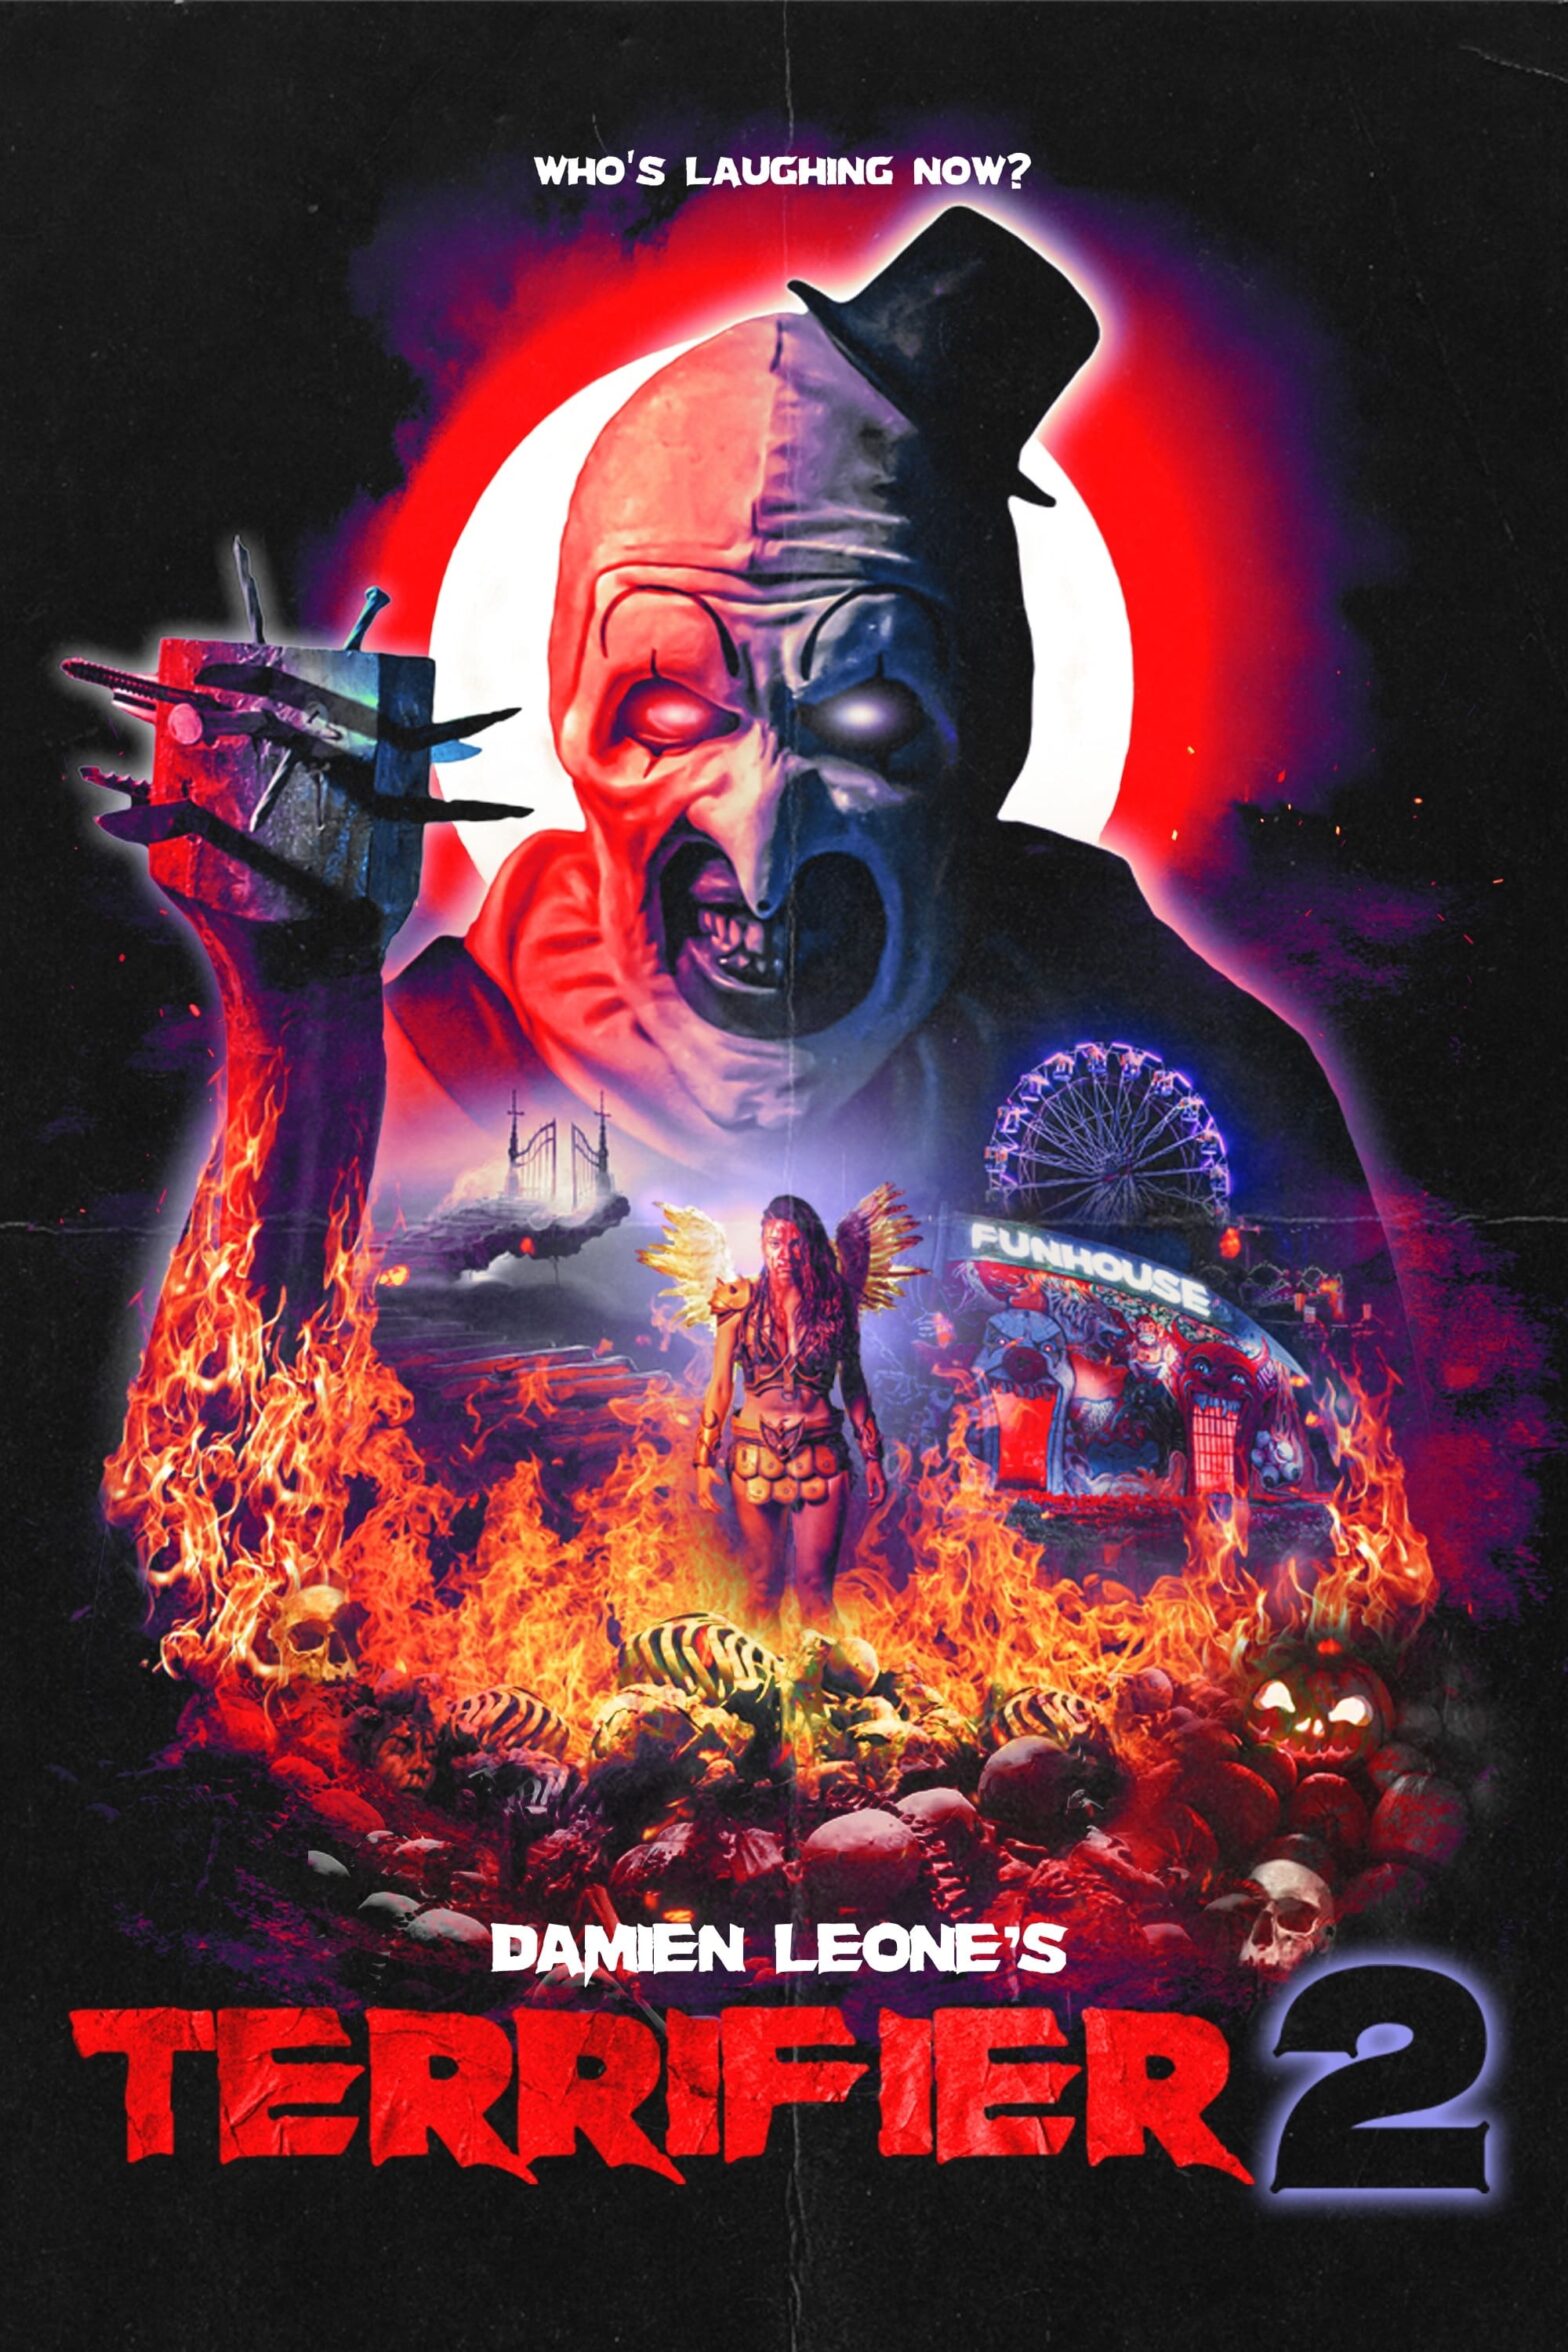 Poster for the movie "Terrifier 2"